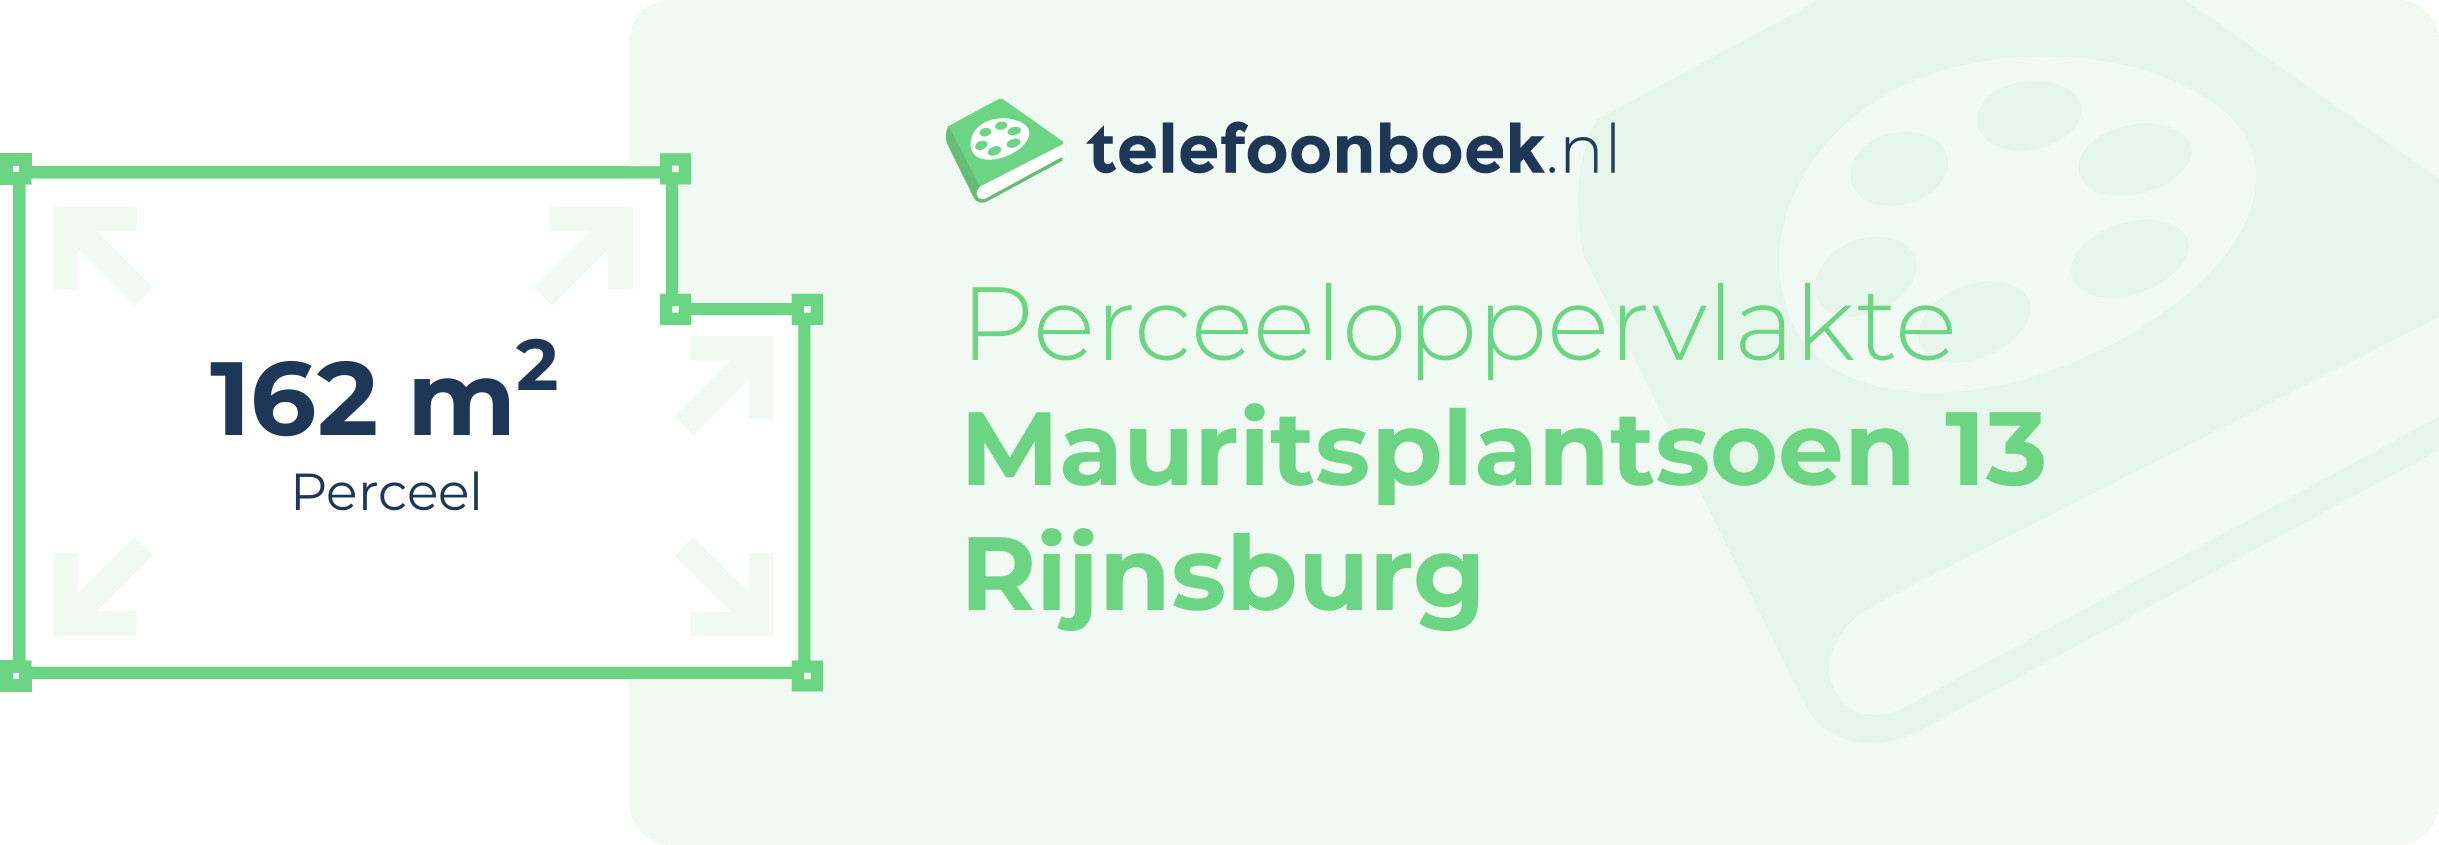 Perceeloppervlakte Mauritsplantsoen 13 Rijnsburg